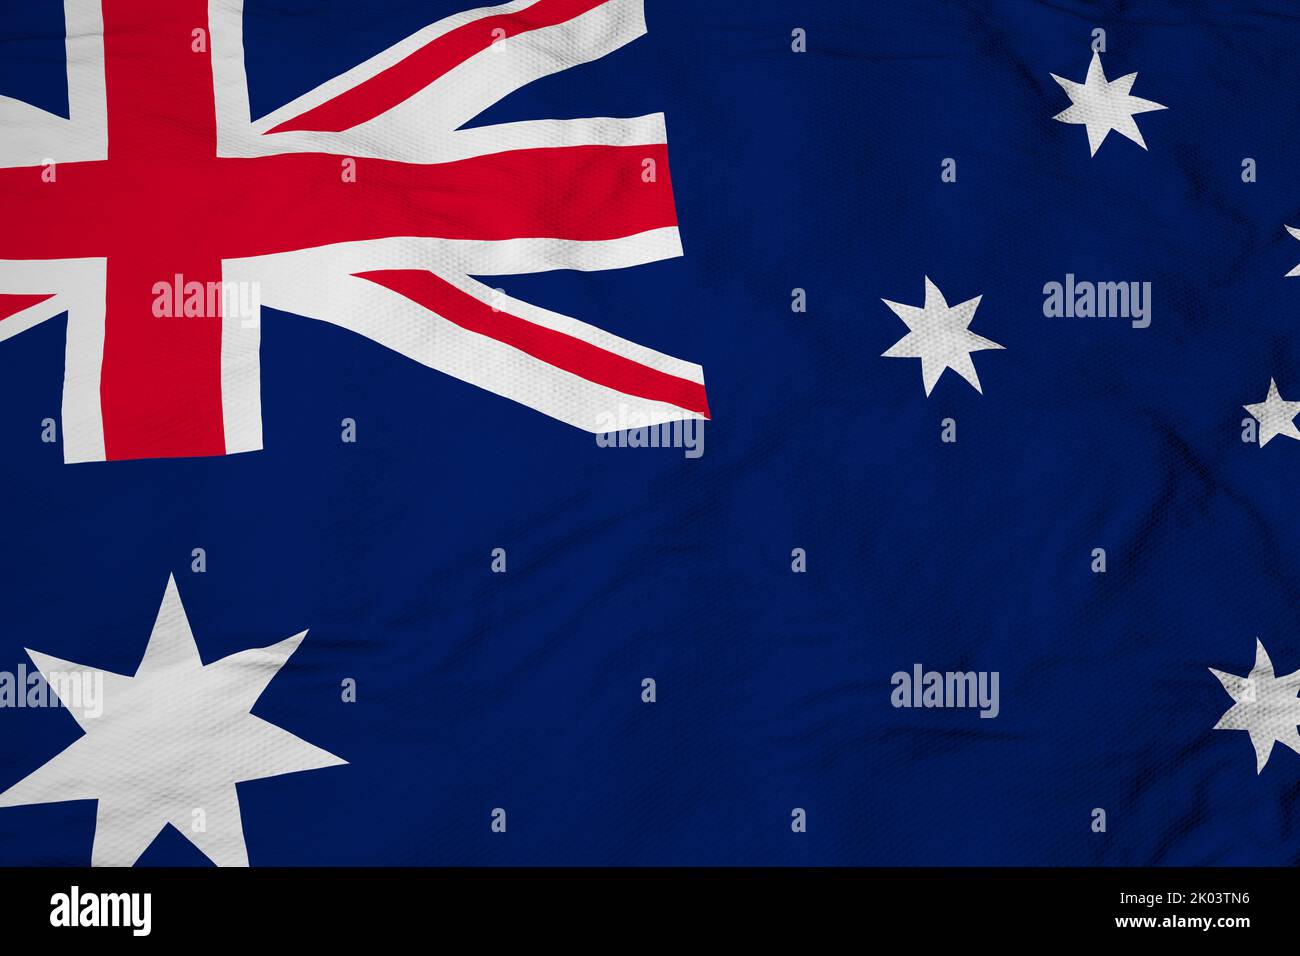 Full frame close-up on a waving Australian flag in 3D rendering. Stock Photo